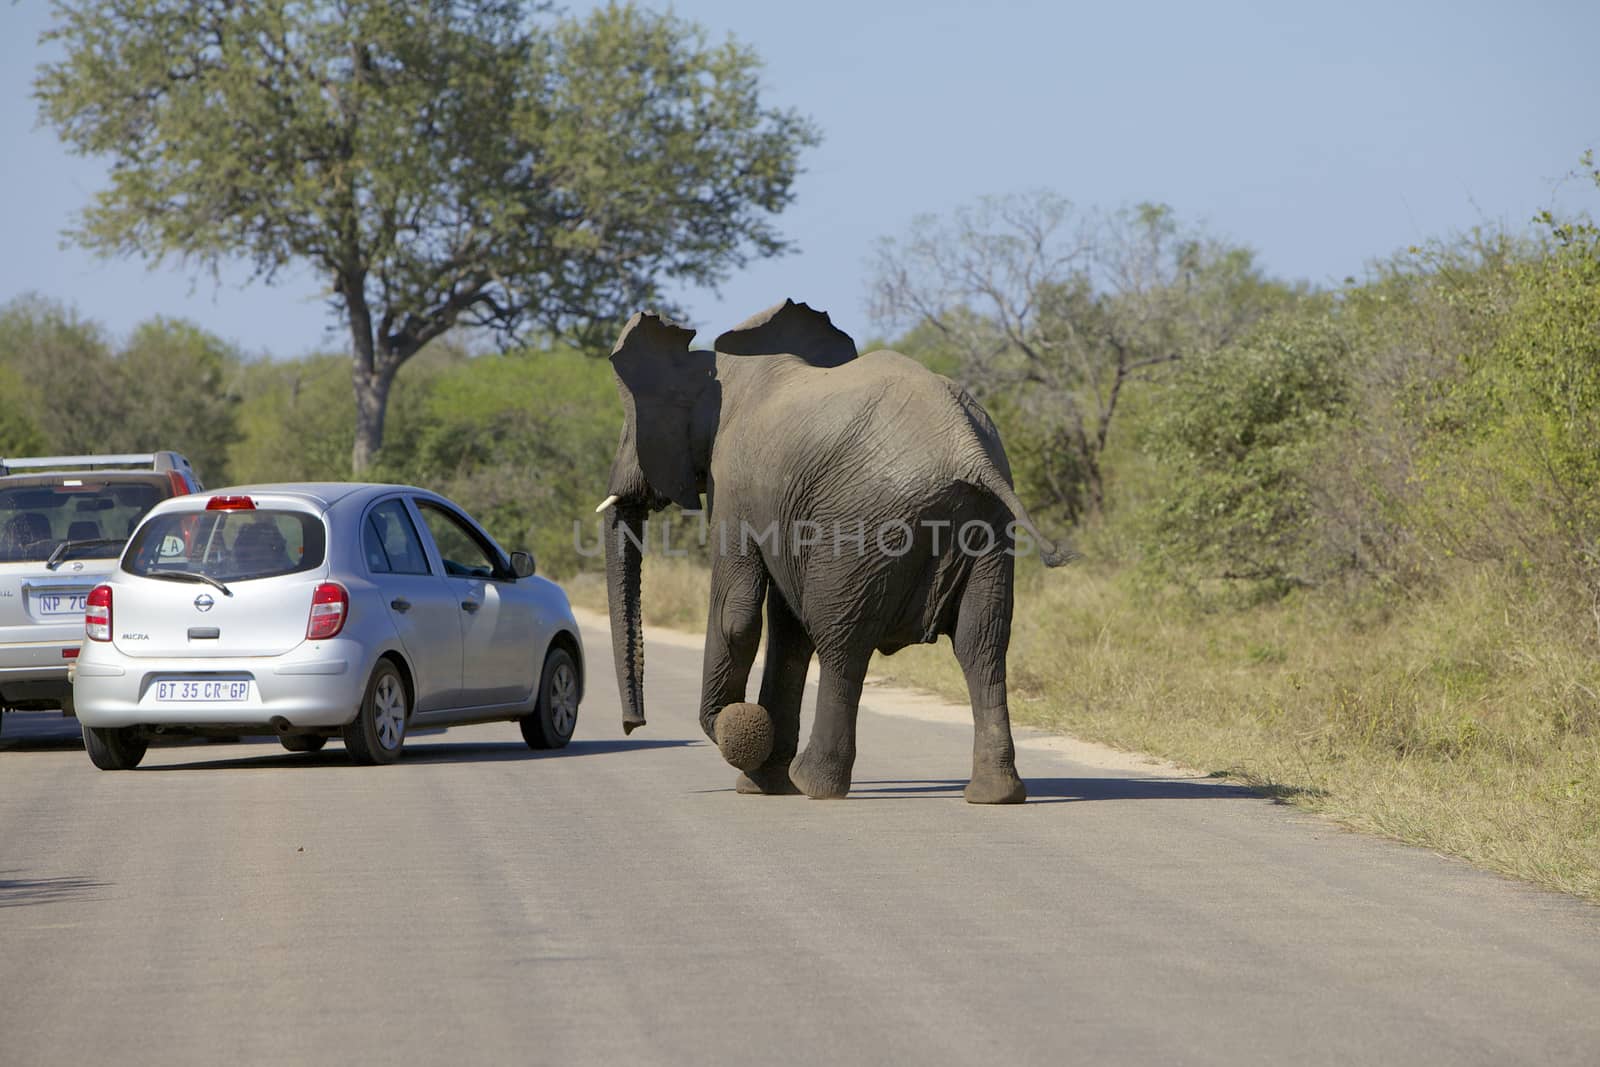 Elephant chasing a car by instinia